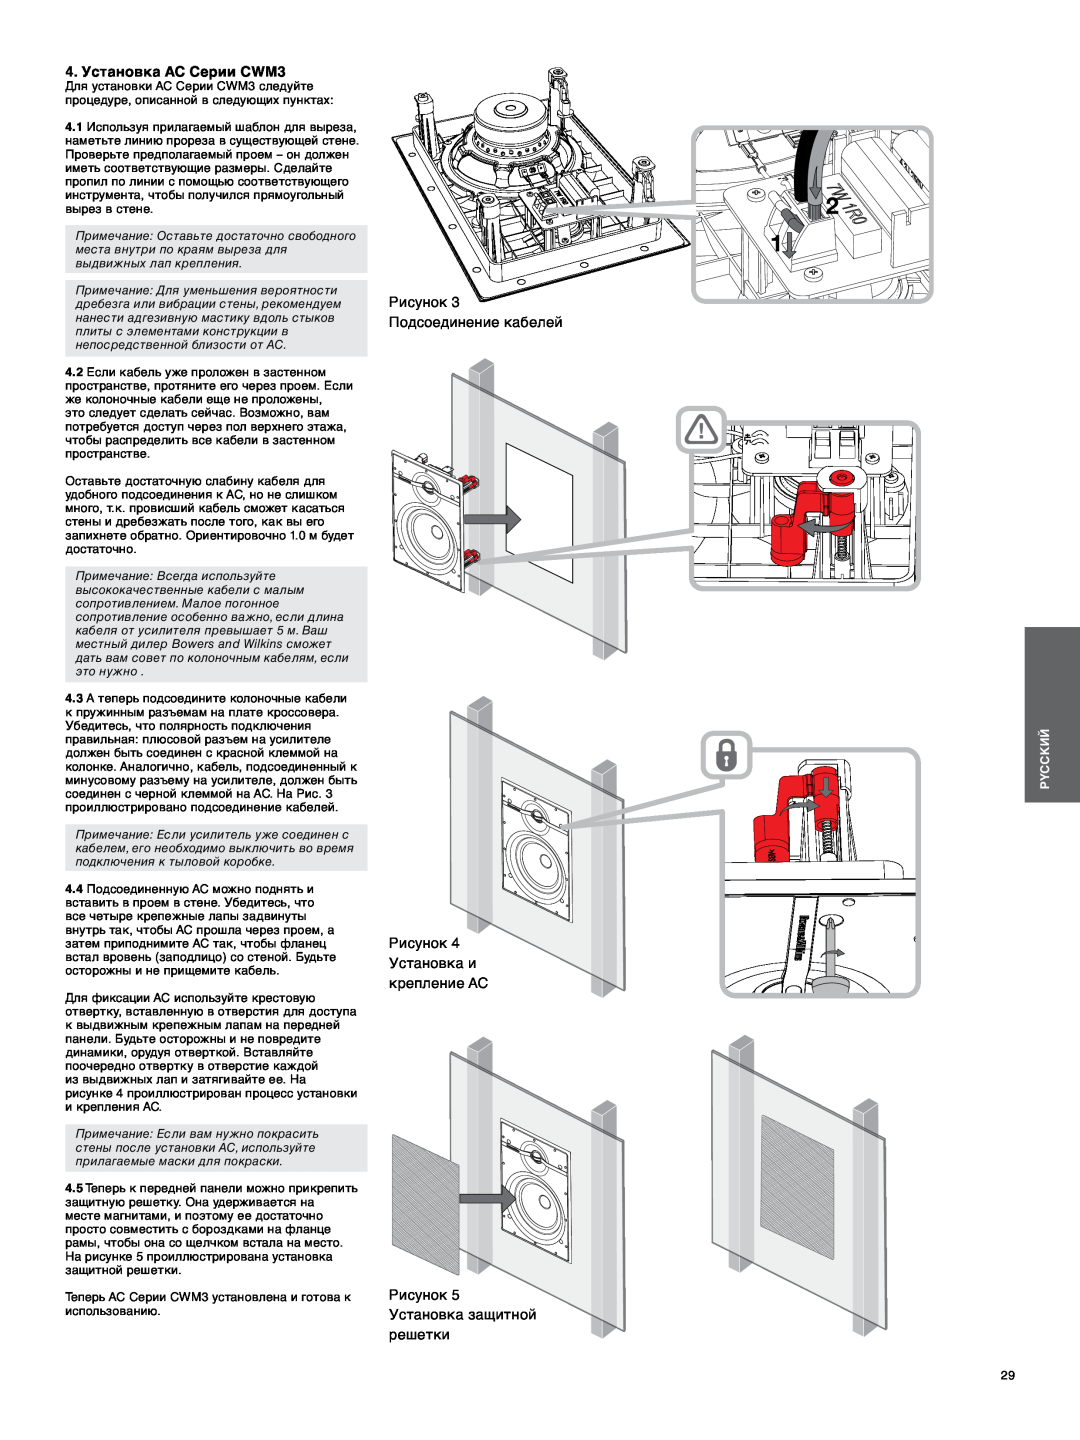 Bowers & Wilkins manual 4. Установка АС Серии CWM3, Рисунок 3 Подсоединение кабелей, Рисунок 4 Установка и крепление АС 